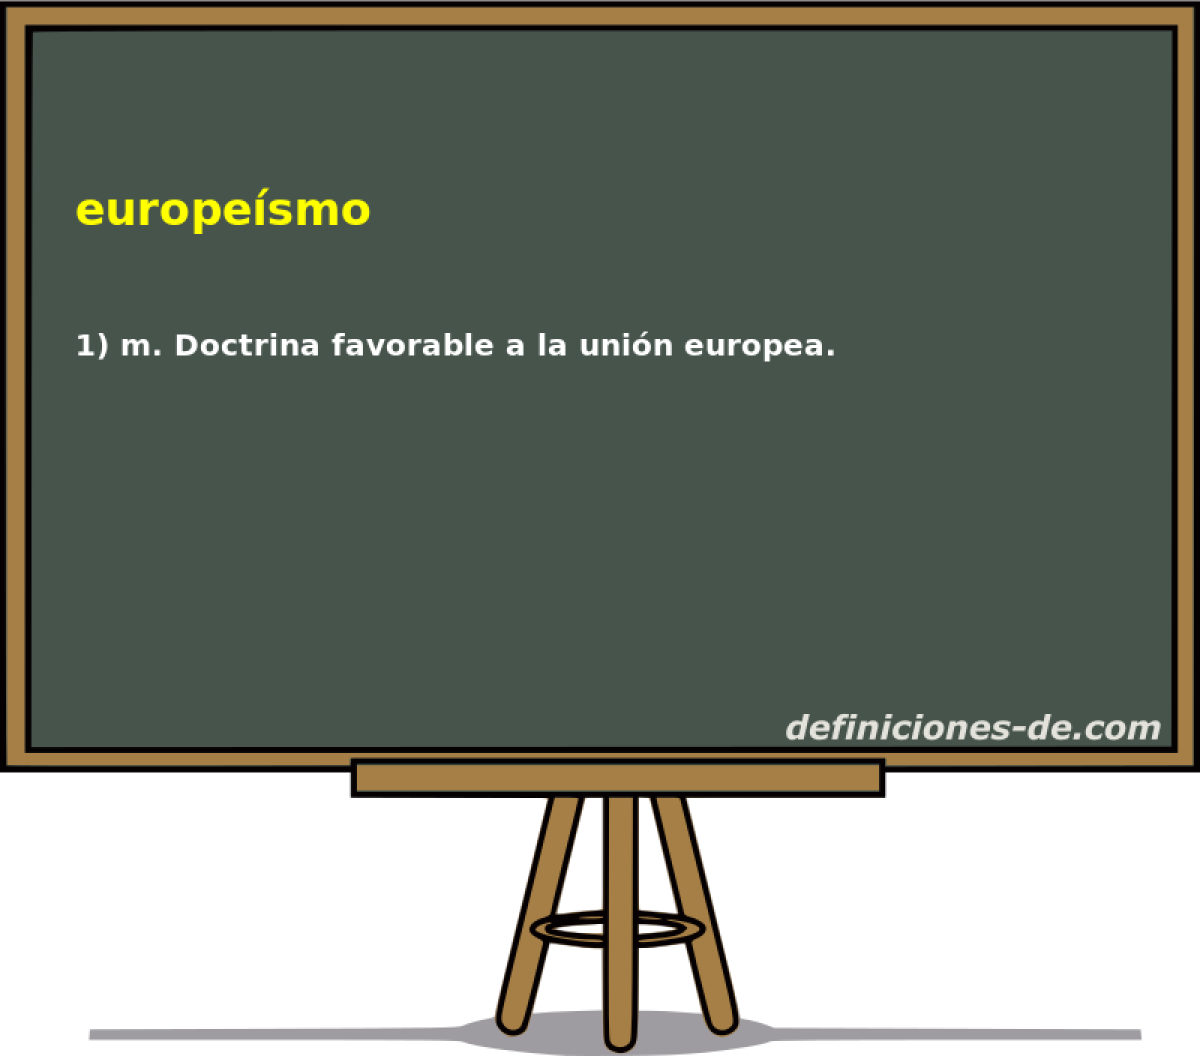 europesmo 